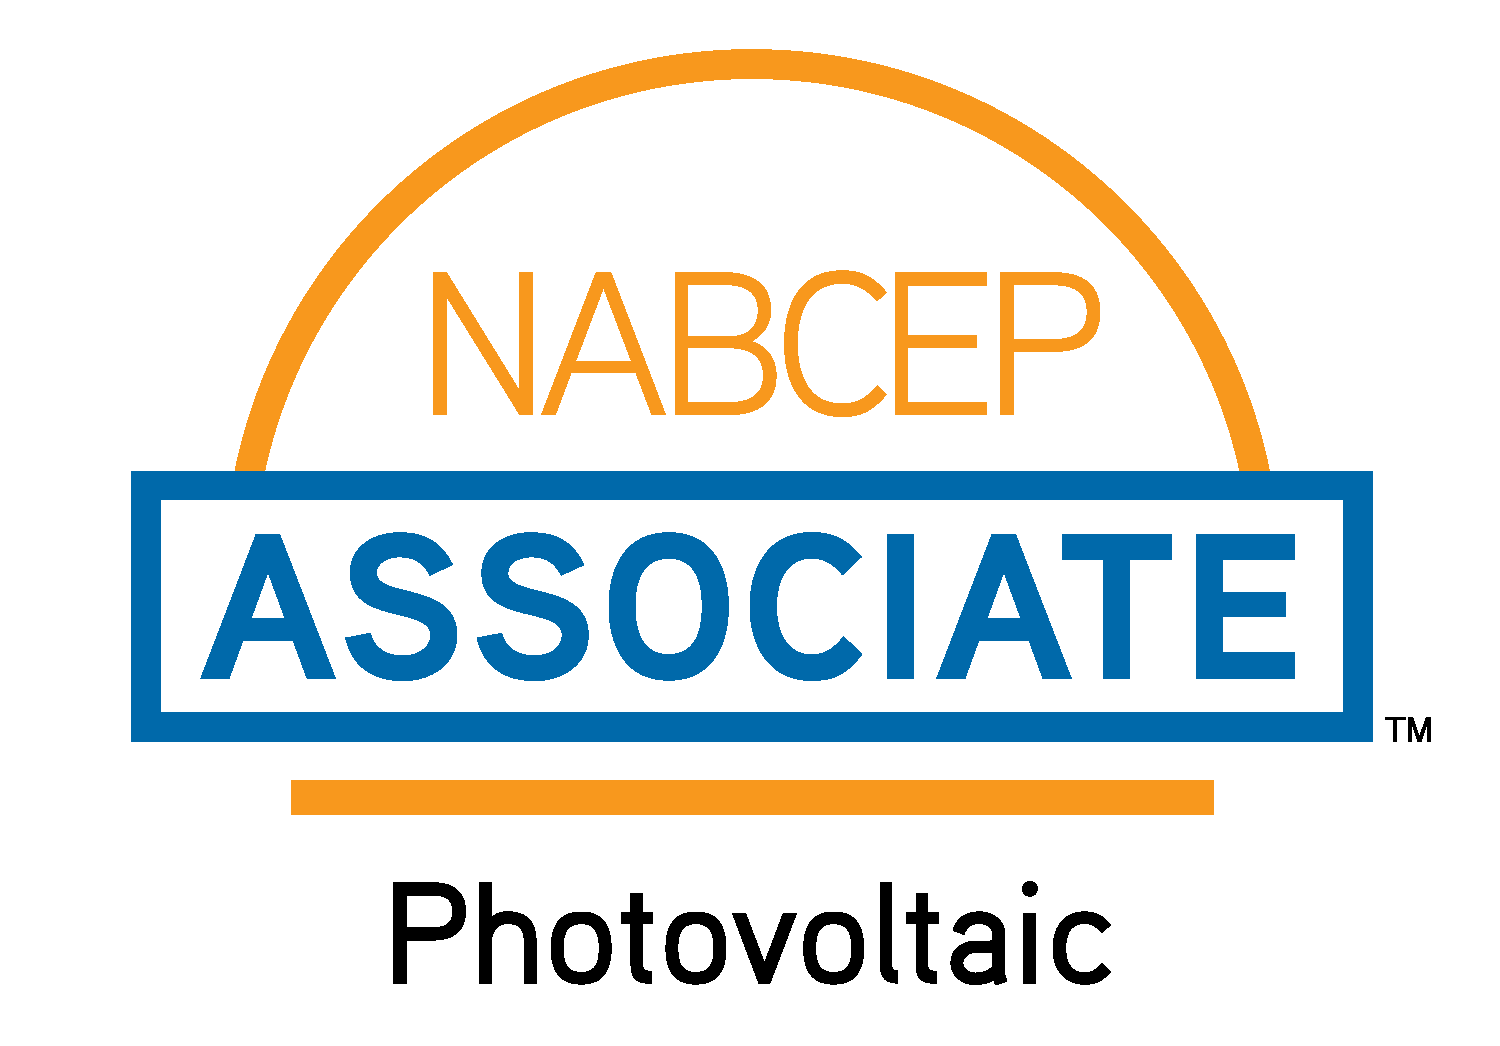 NABCEP Associate Photovoltaic